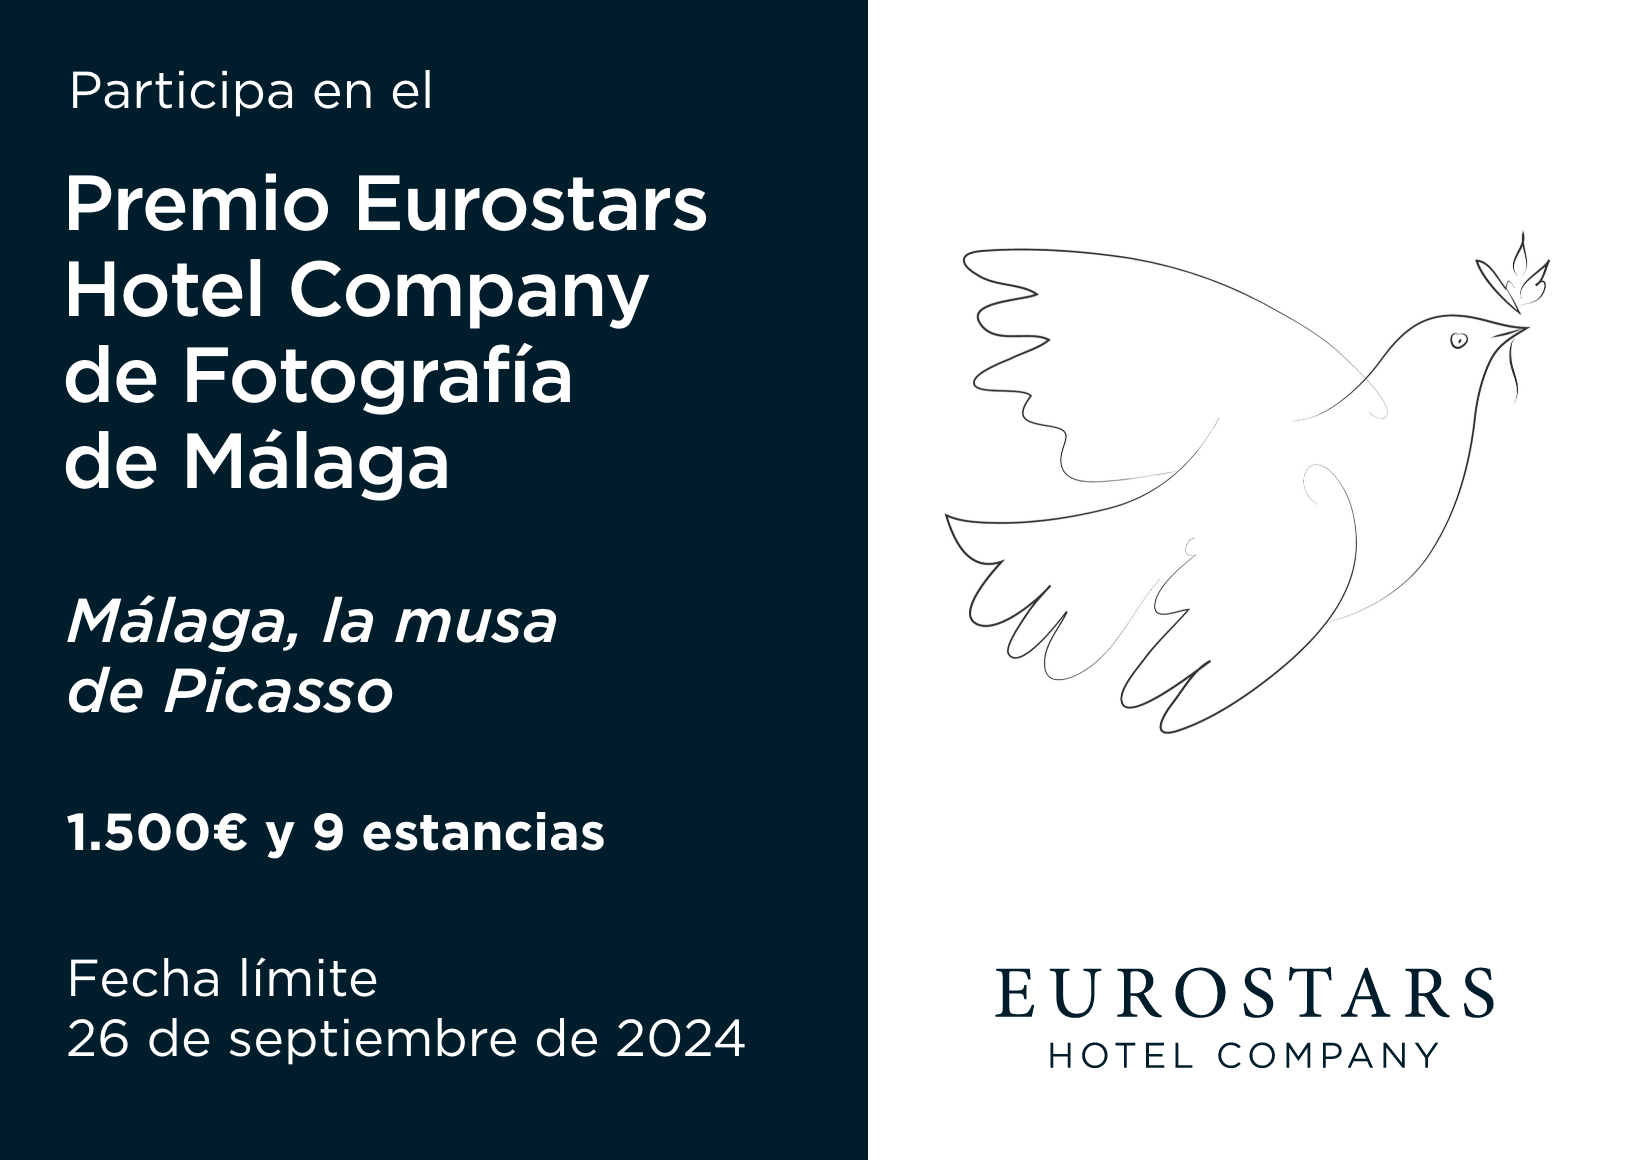 Premio Eurostars Hotel Company de Fotografía de Málaga